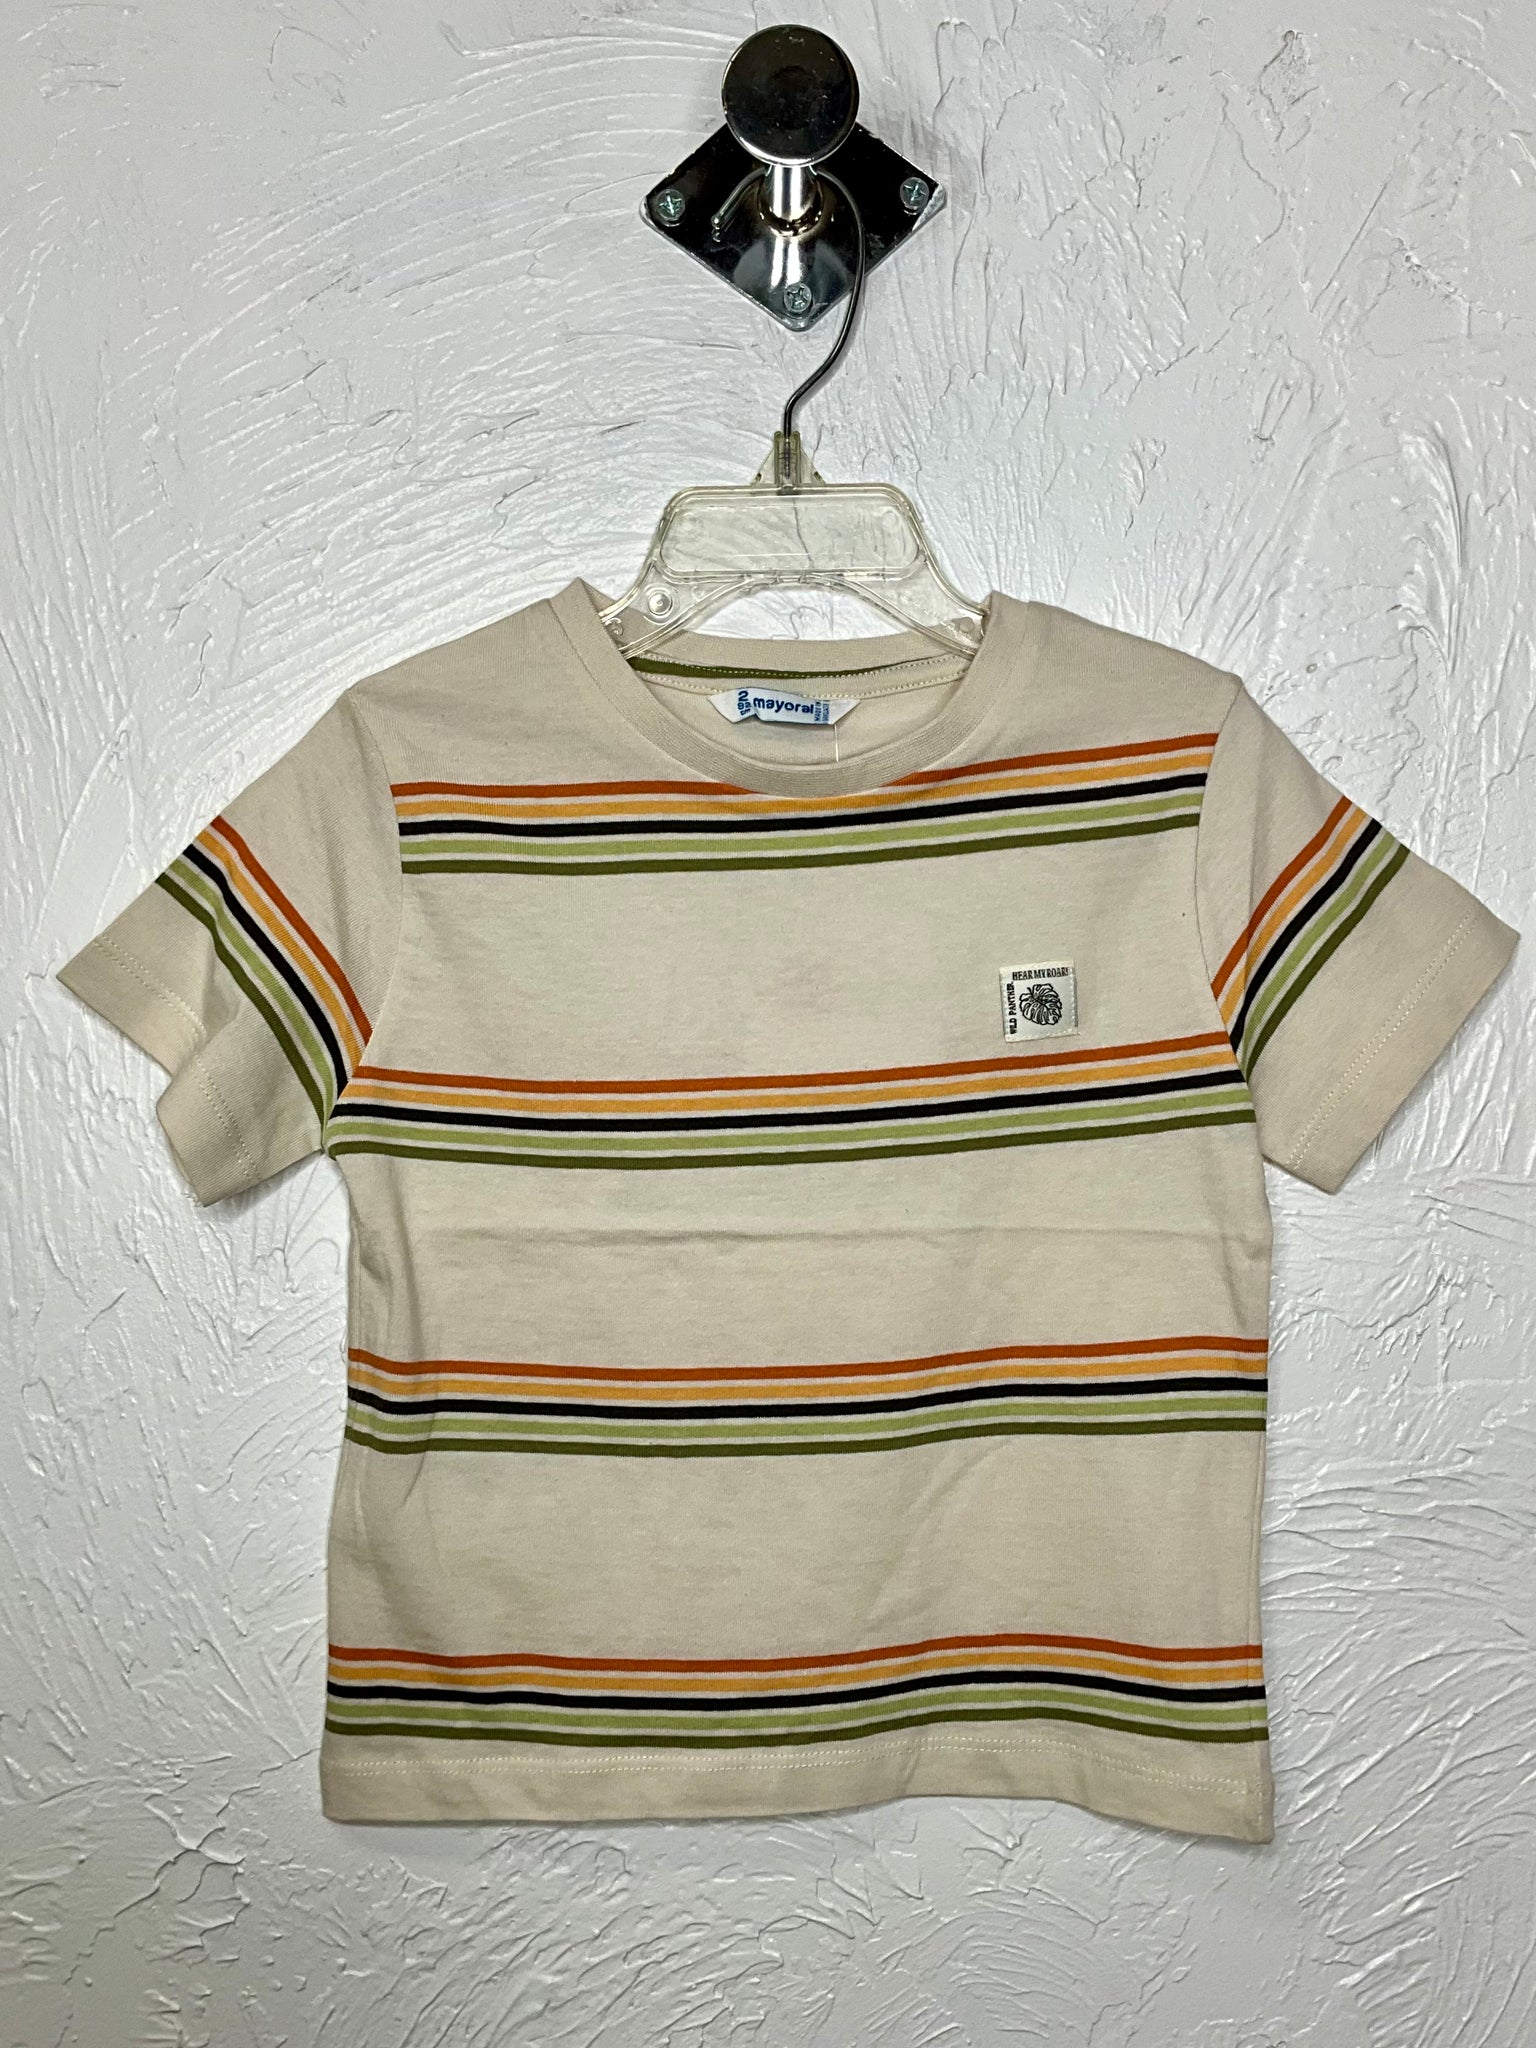 Multi Color Stripe Shirt